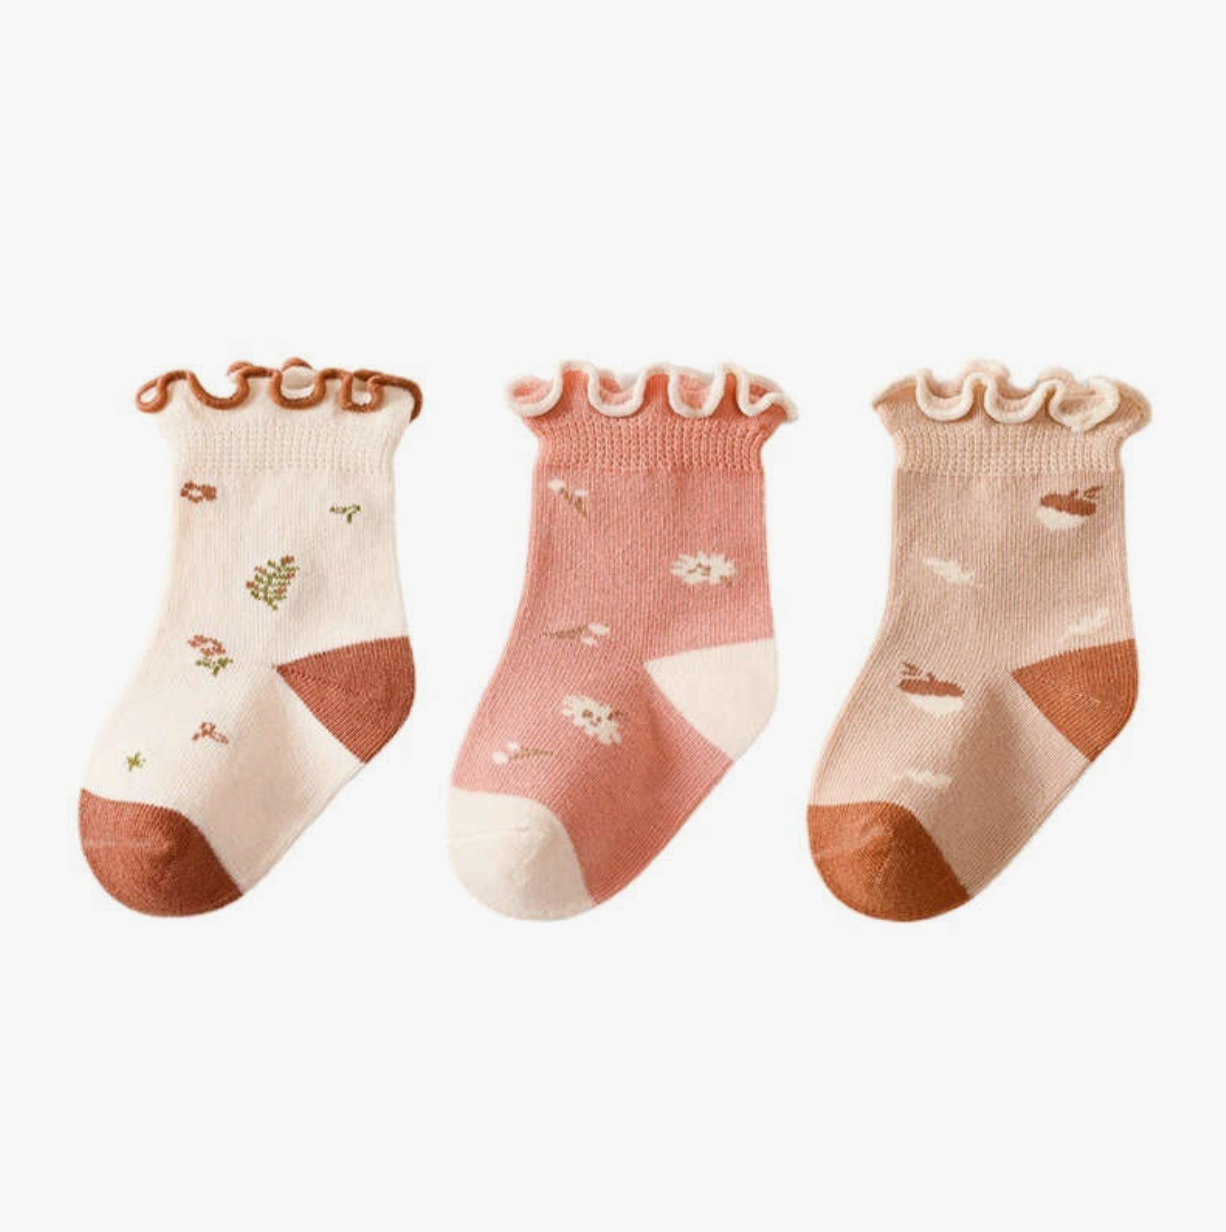 Cute Newborn Baby Socks with Wooden Ears Socks Three Pair